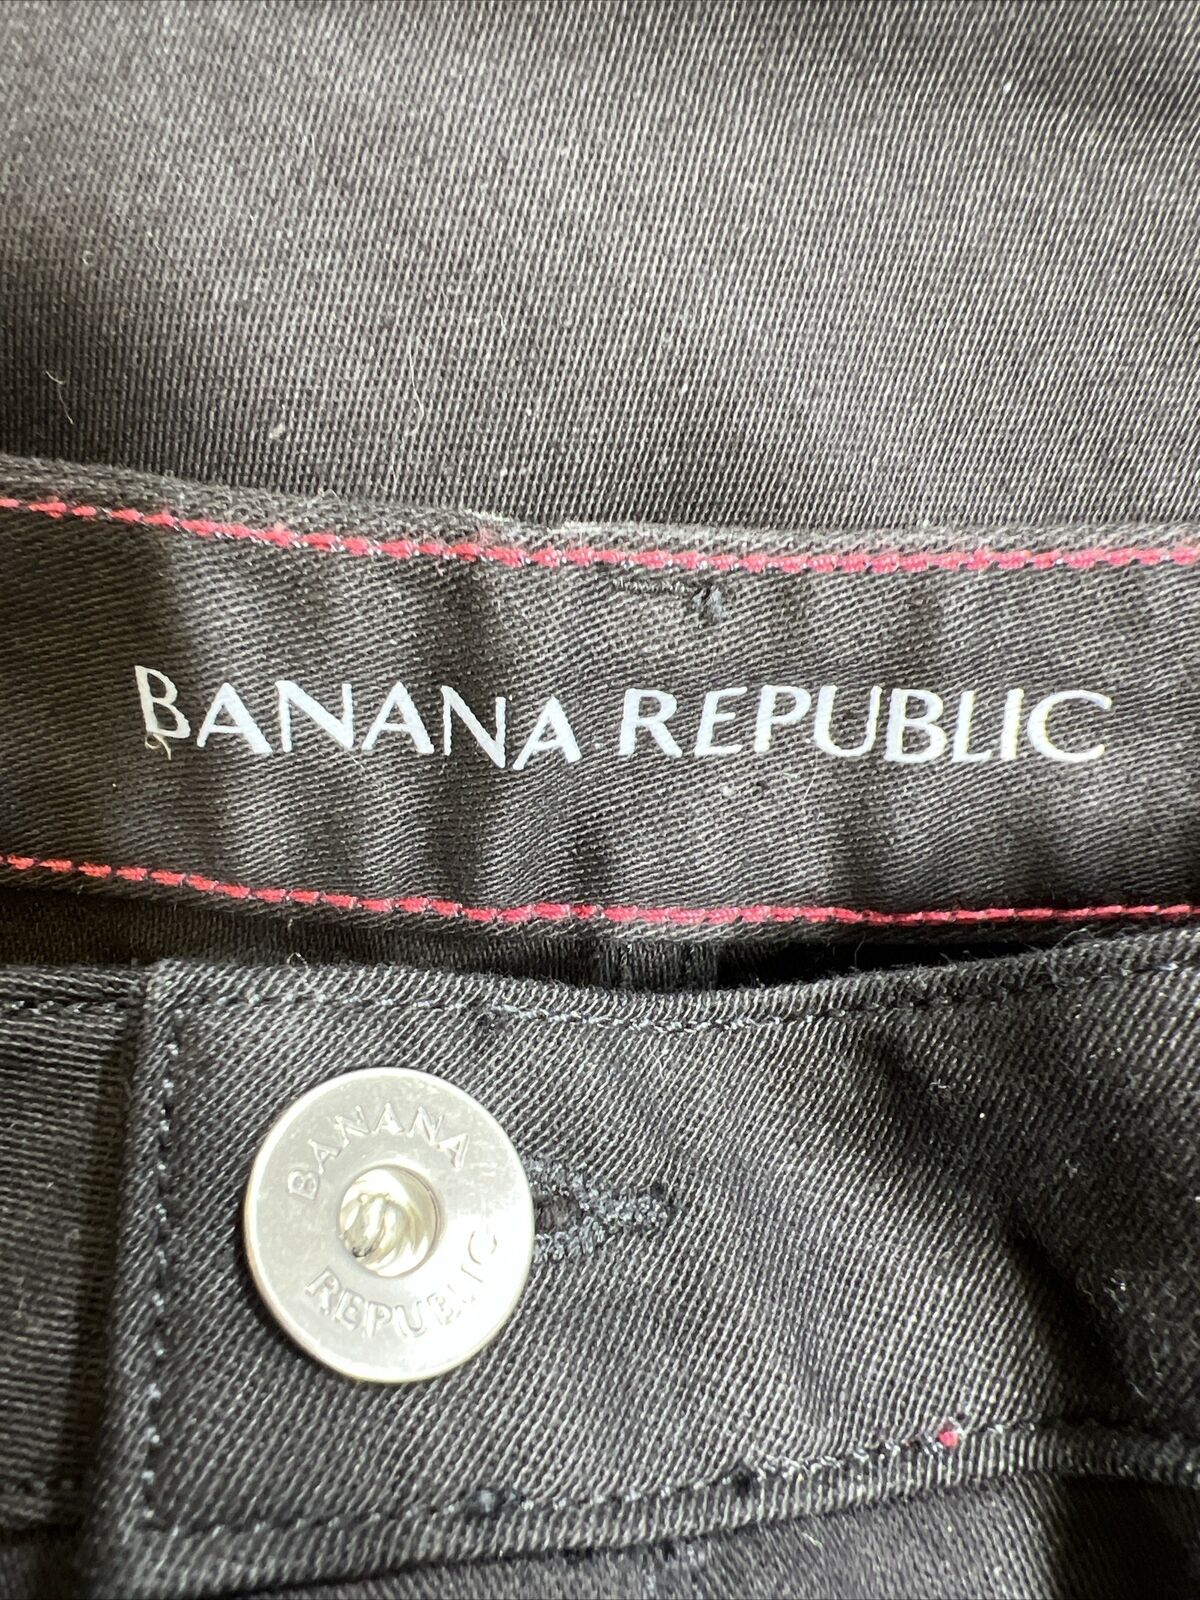 Banana Republic Women's Black Skinny Jeans - 32